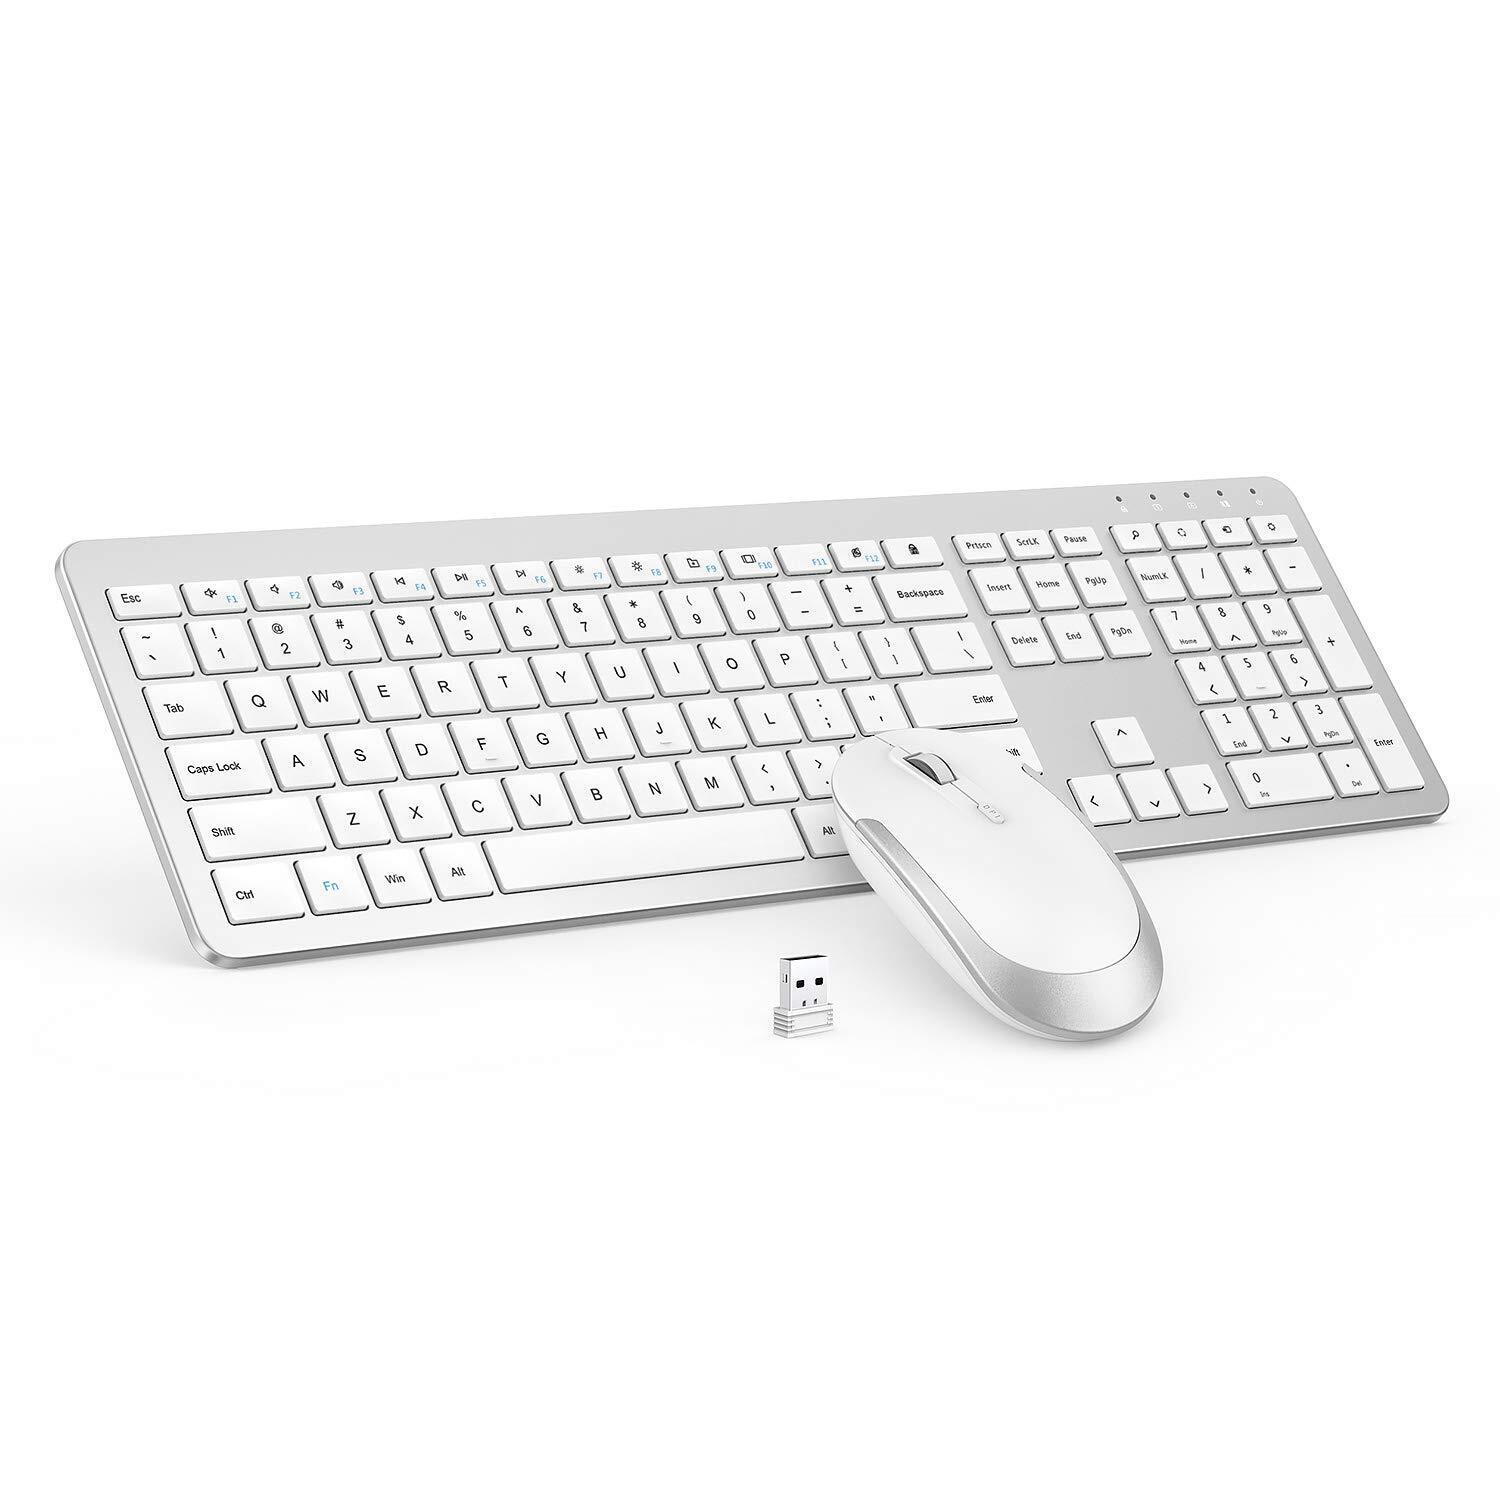 Wireless Keyboard and Mouse Combo - Full Size Slim Thin Wireless Keyboard Mou...